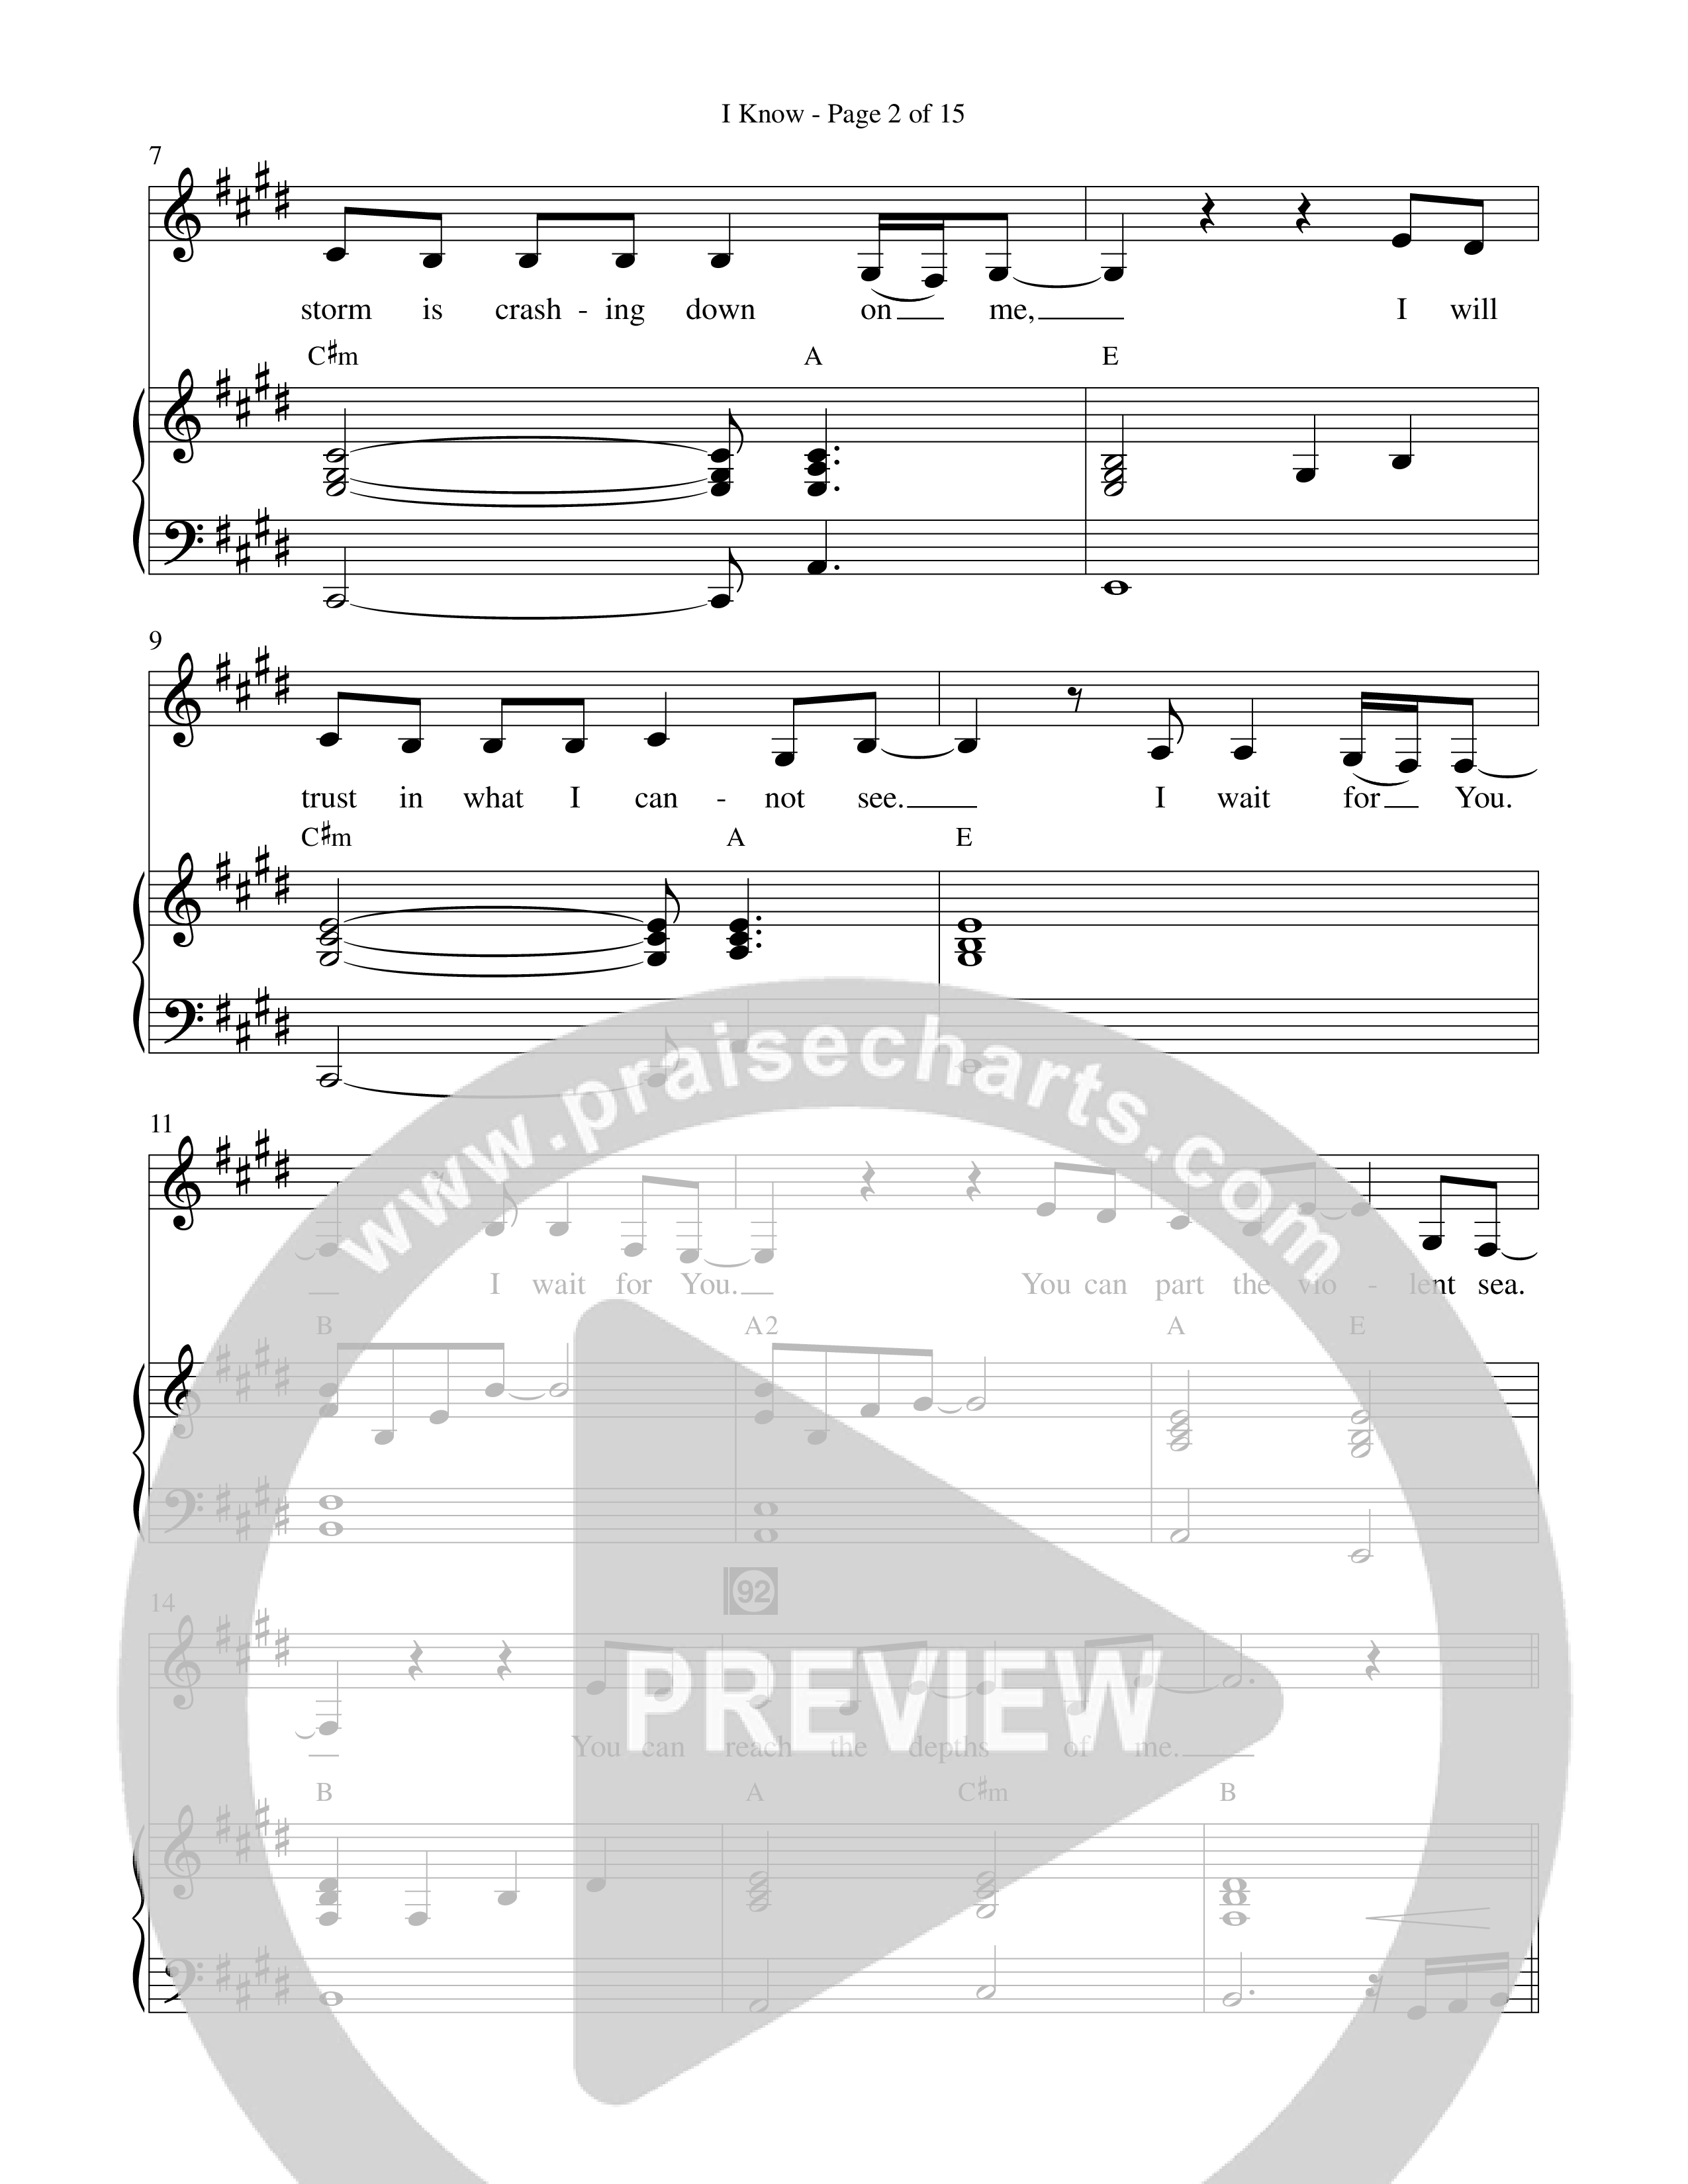 I Know (Choral Anthem SATB) Octavo (Vocals & Piano) (Prestonwood Worship / Prestonwood Choir / Arr. Jonathan Walker)